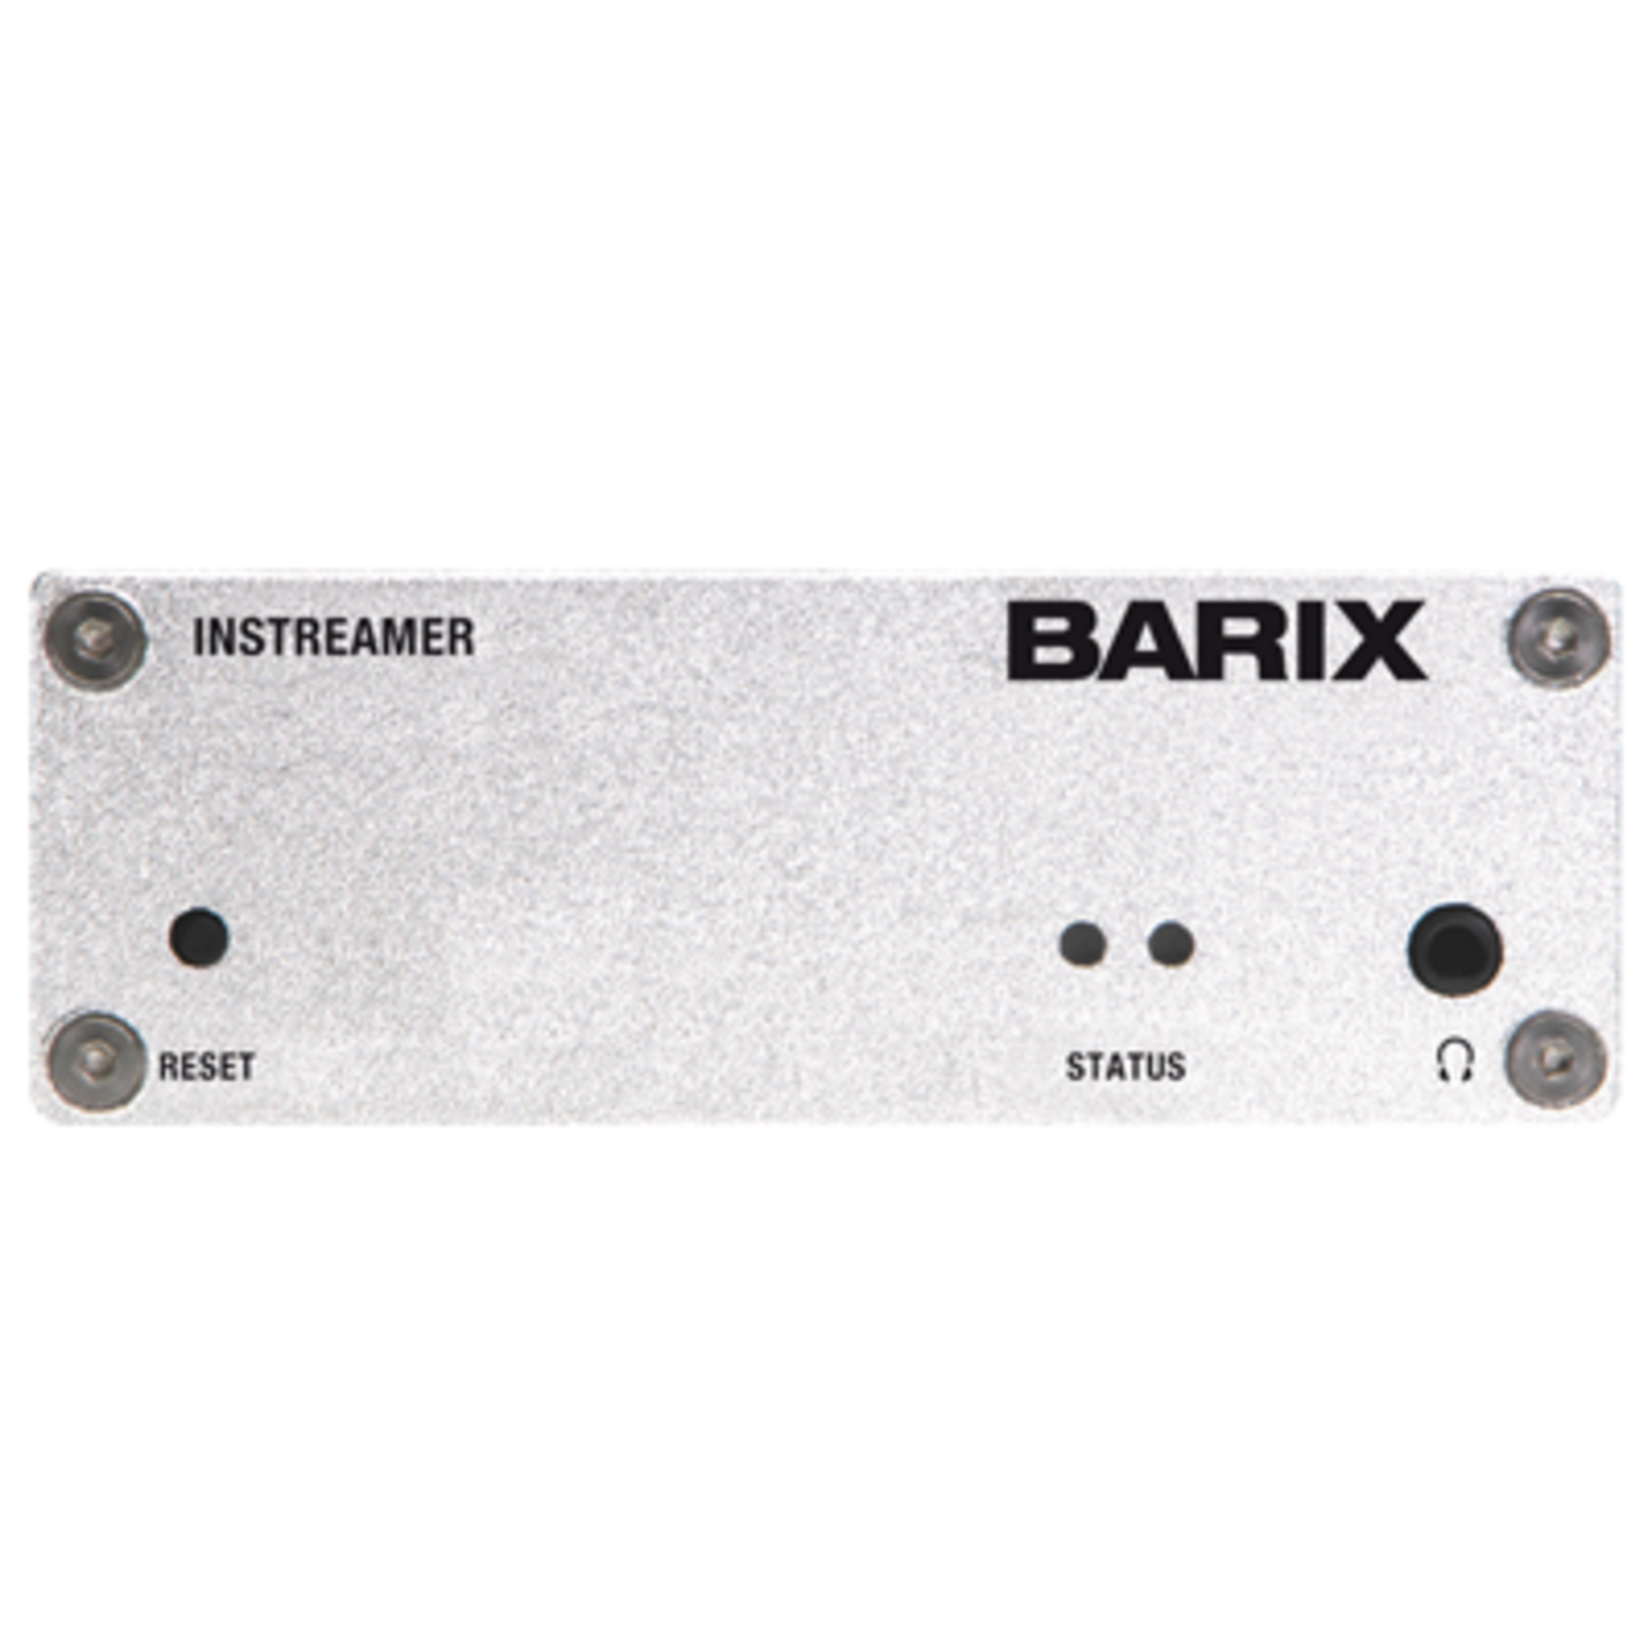 BARIX Instreamer EU package (230V - micro USB type)